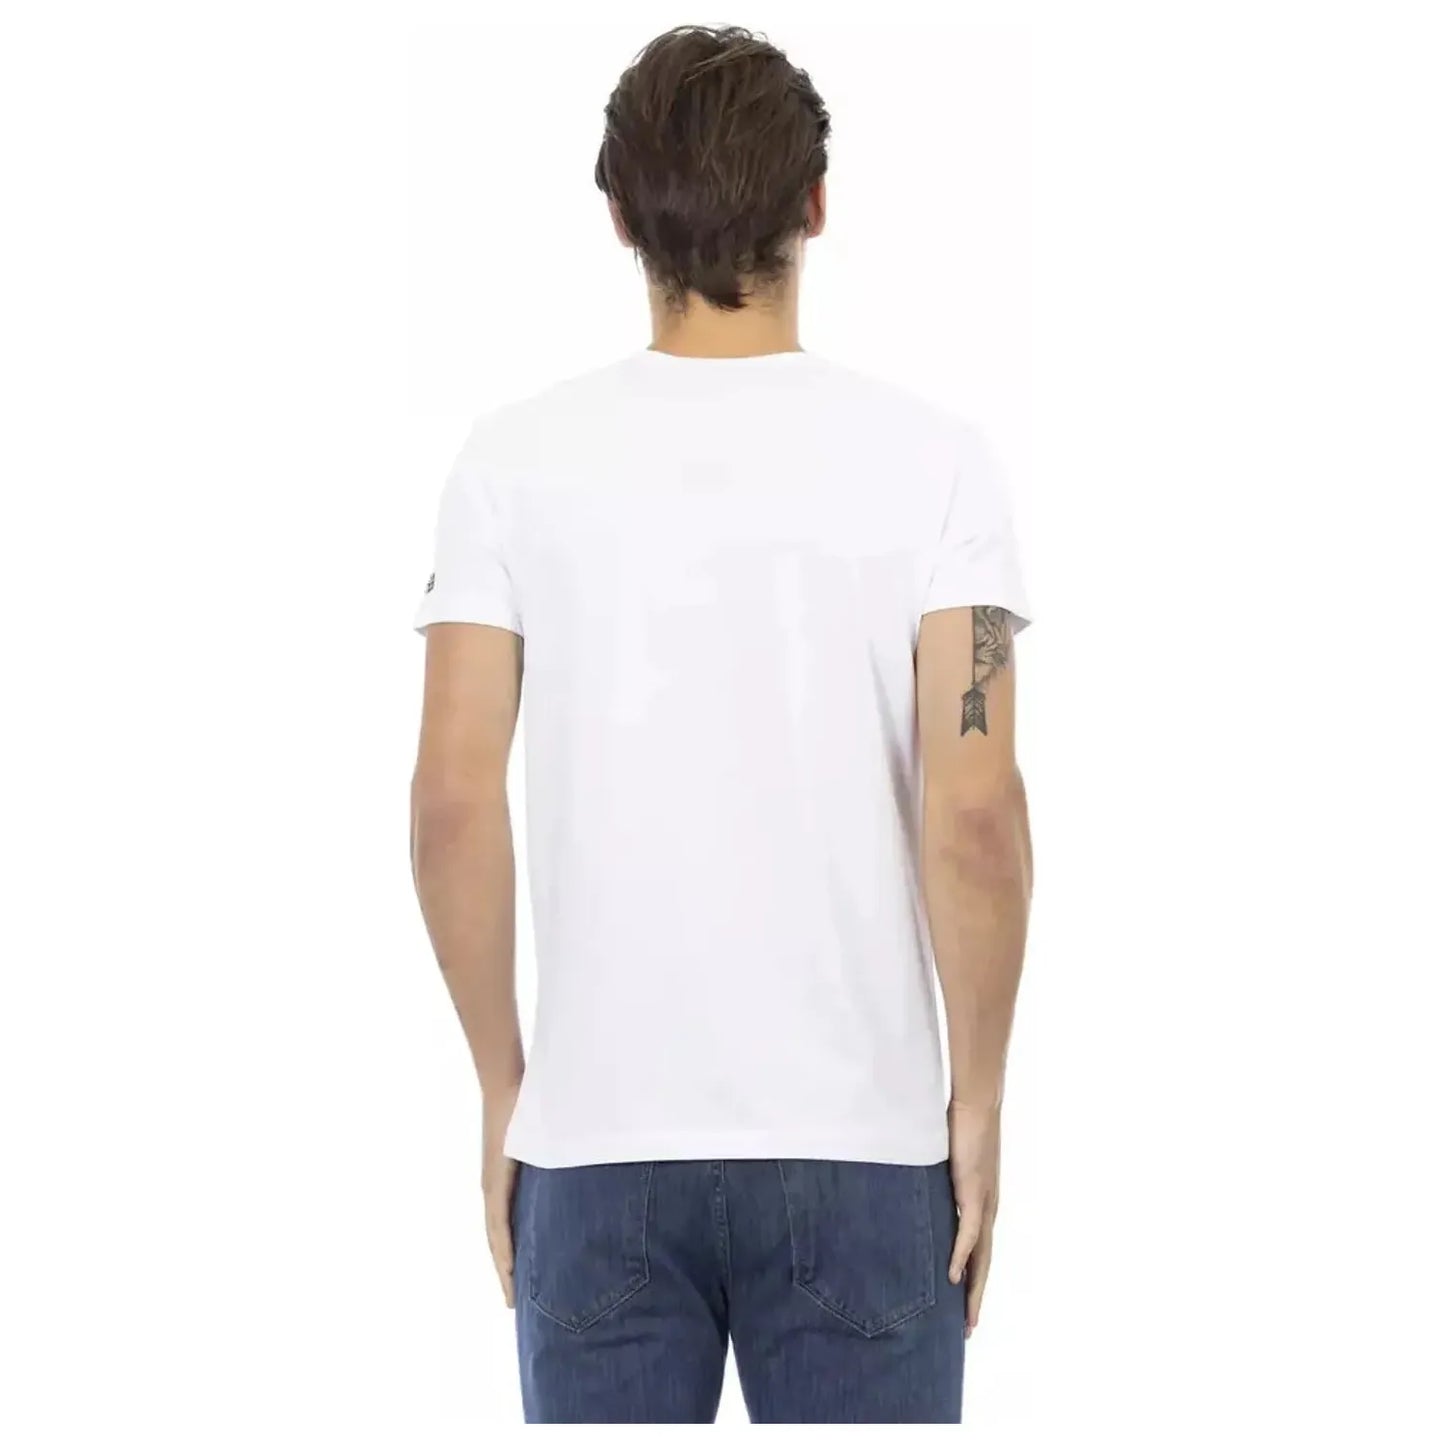 Trussardi Action Elegant V-Neck Designer Tee with Chic Front Print white-cotton-t-shirt-62